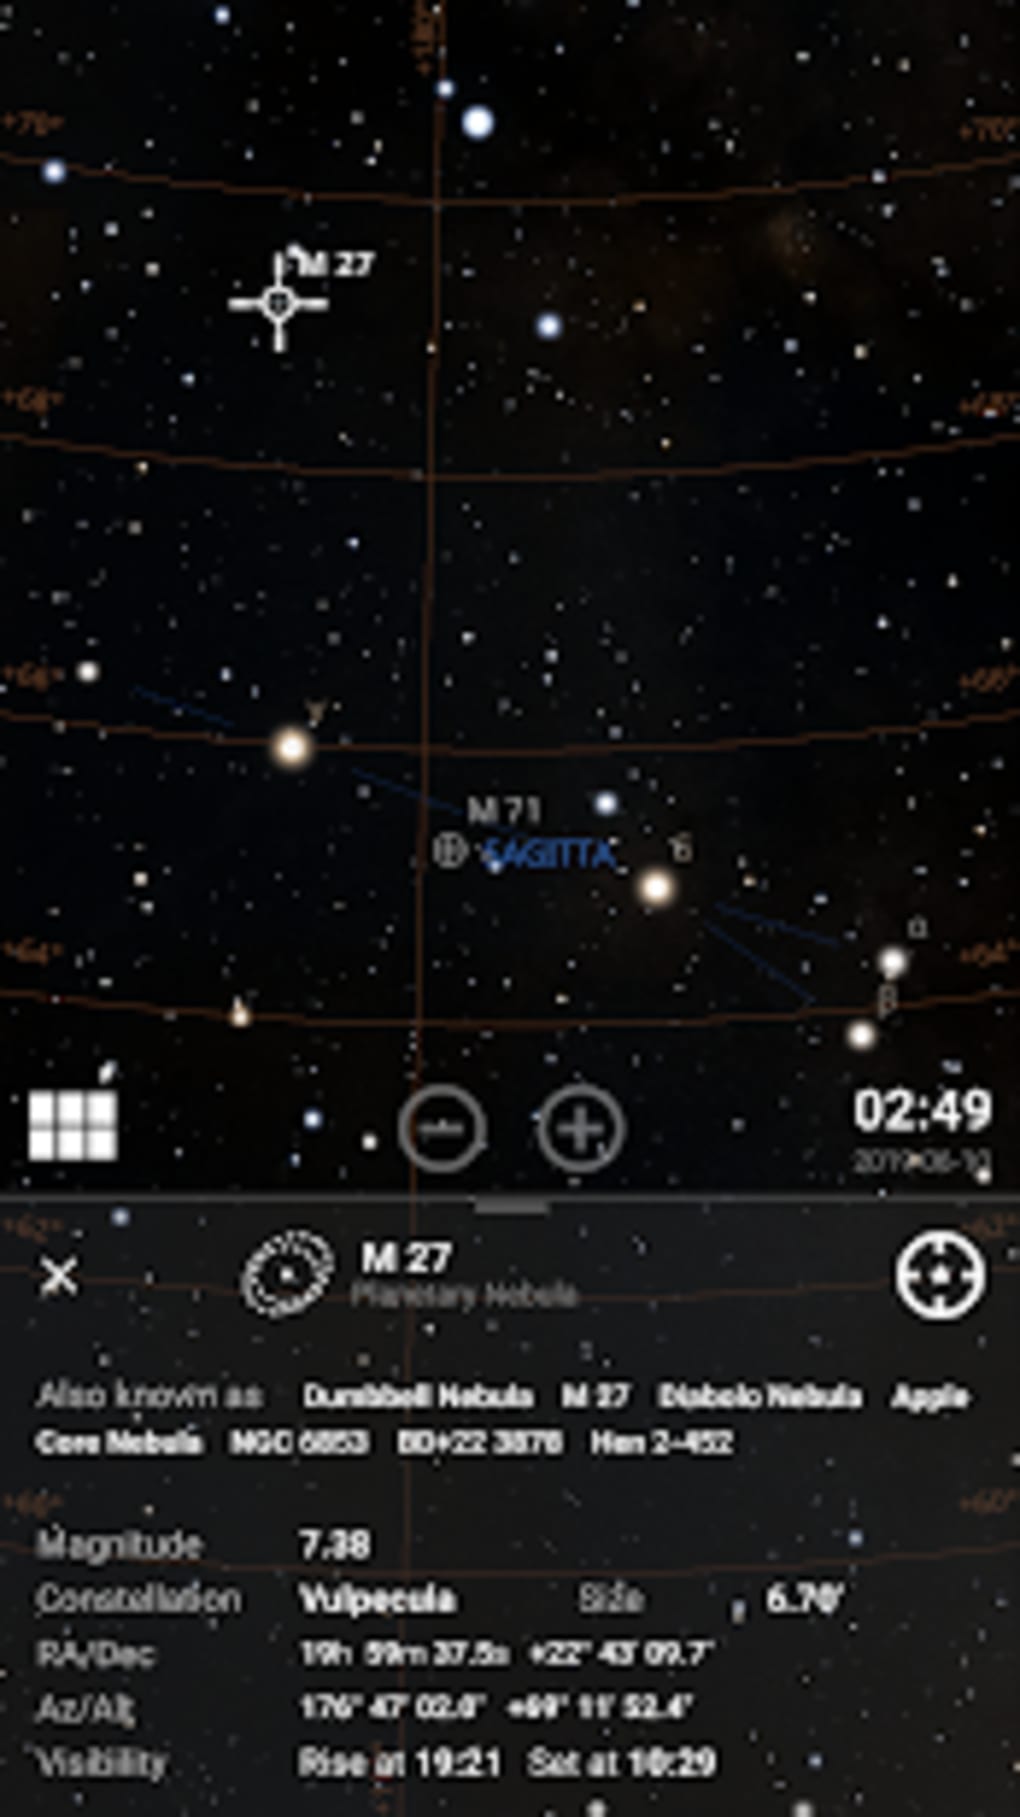 stellarium mobile sky map free download